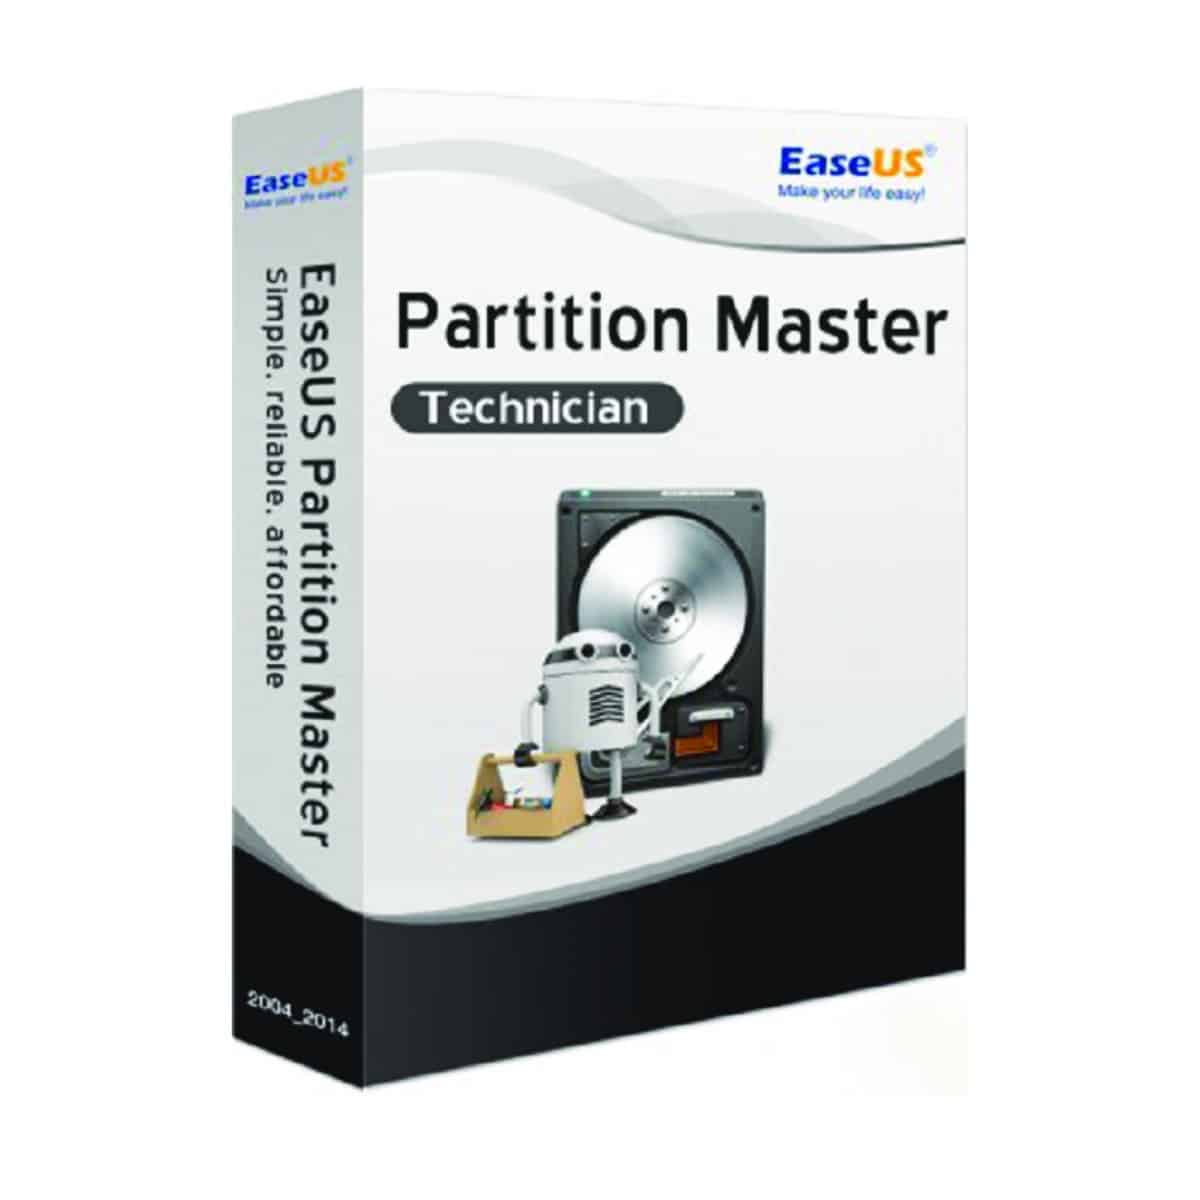 Best4software EaseUS Partition Master Technician EUSPMTAV 299 Partitions Manager